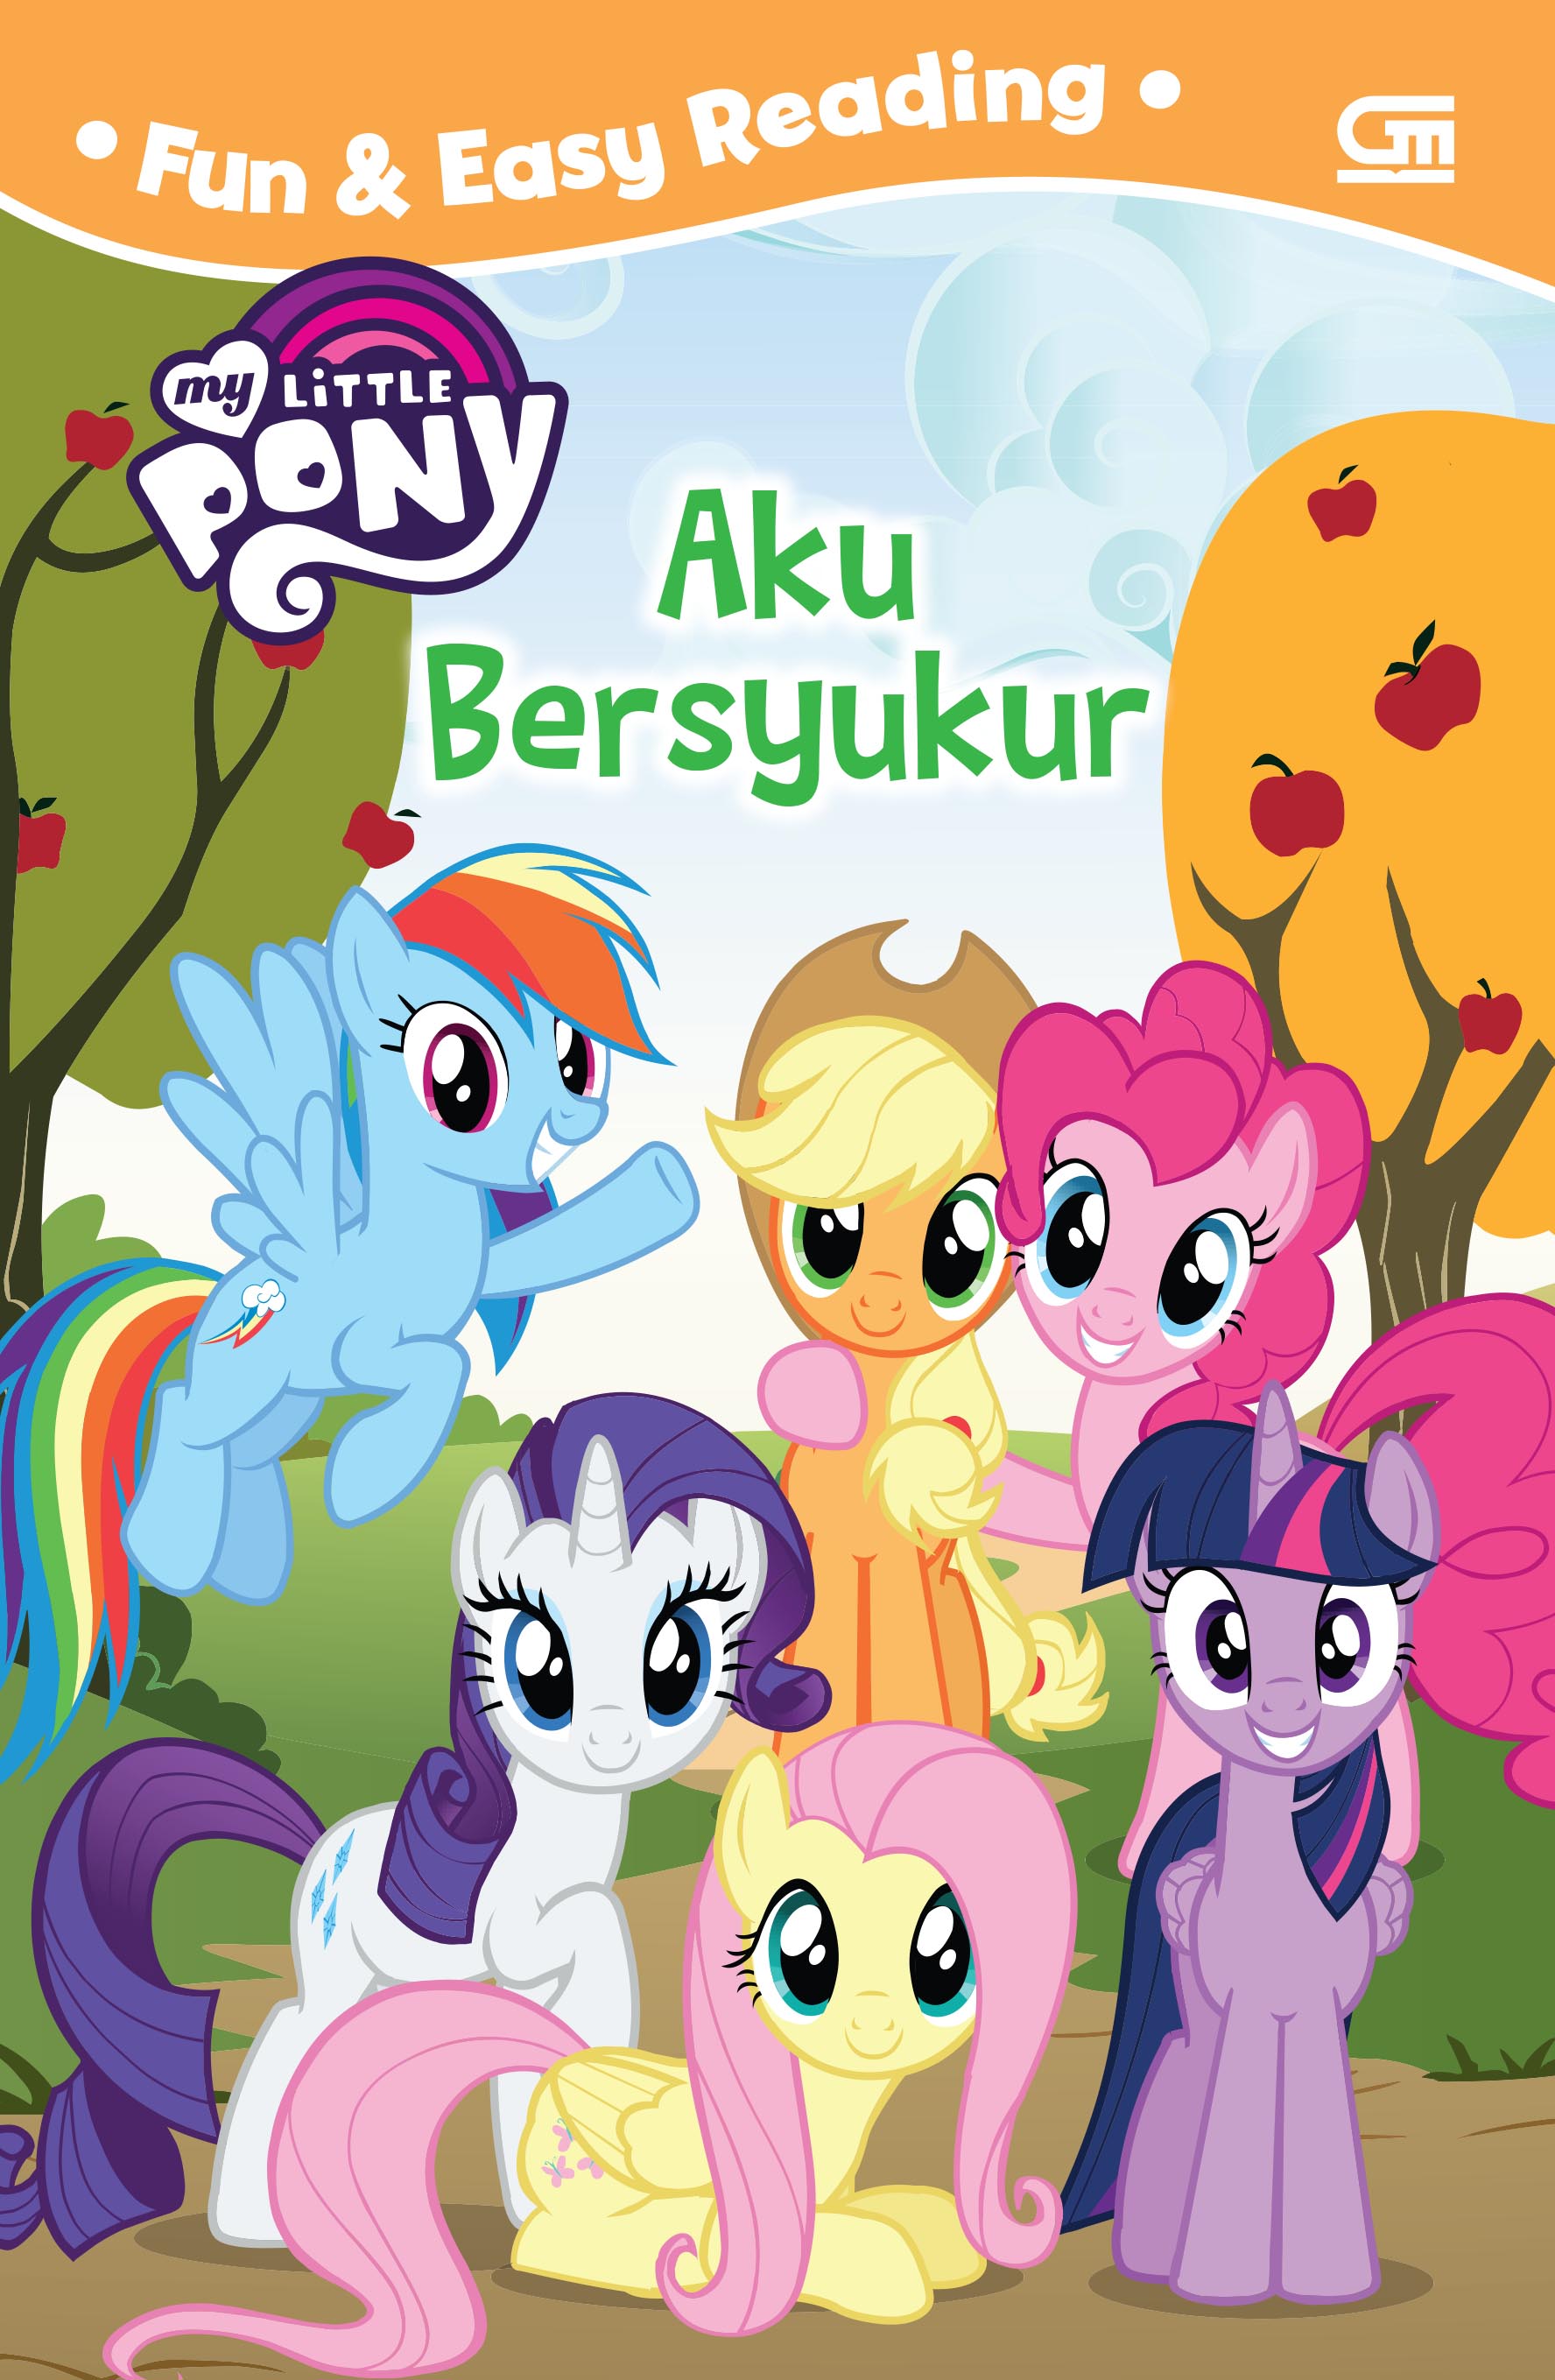 My Little Pony Fun & Easy Reading: Aku Bersyukur